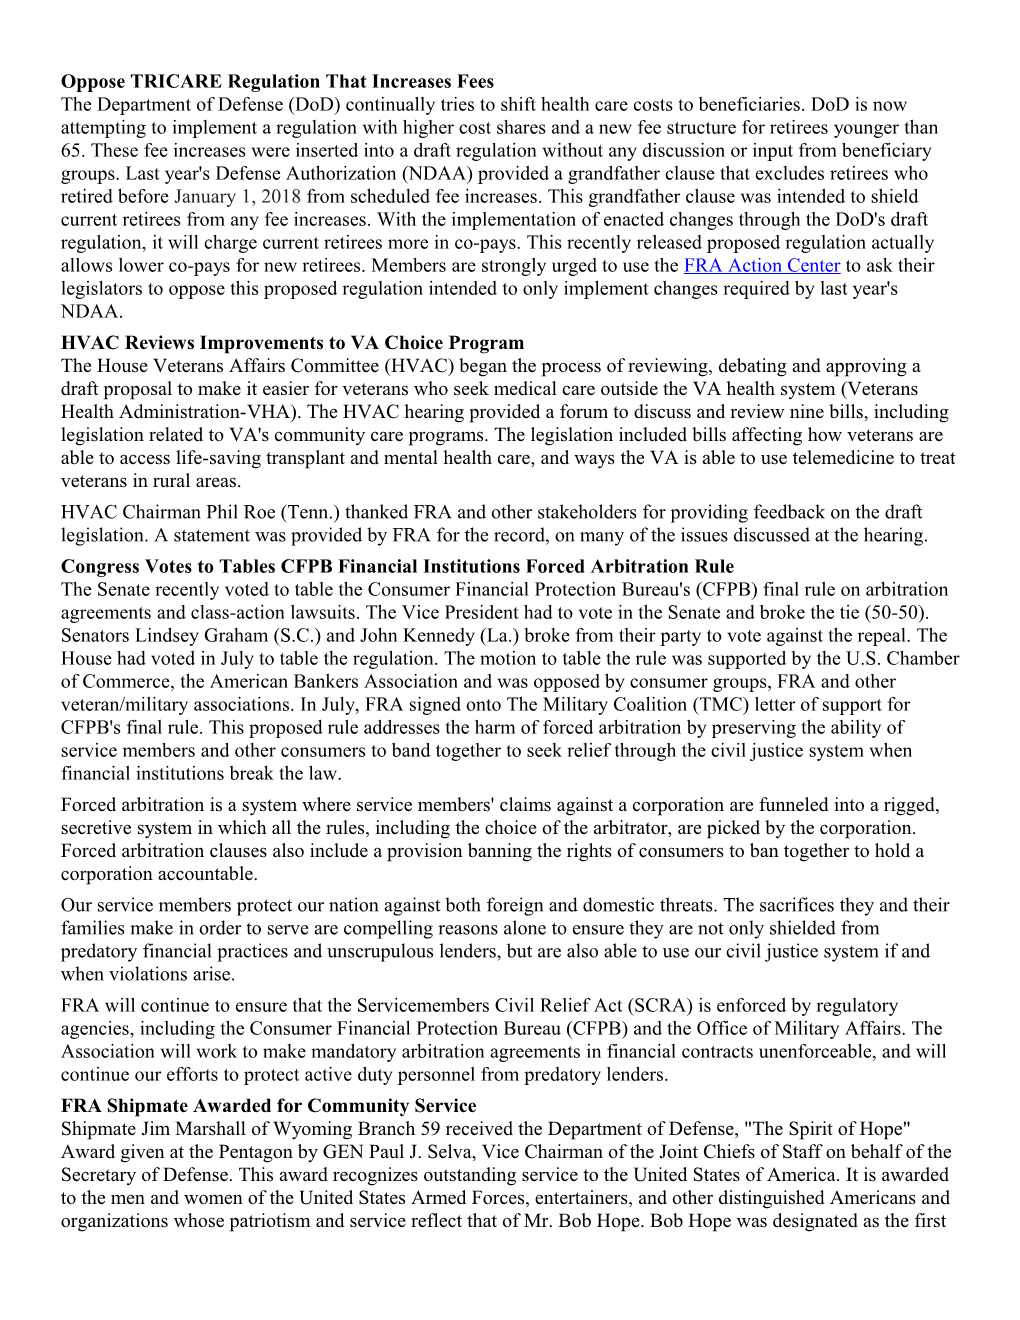 HVAC Reviews Improvements to VA Choice Program the House Veterans Affairs Committee (HVAC)